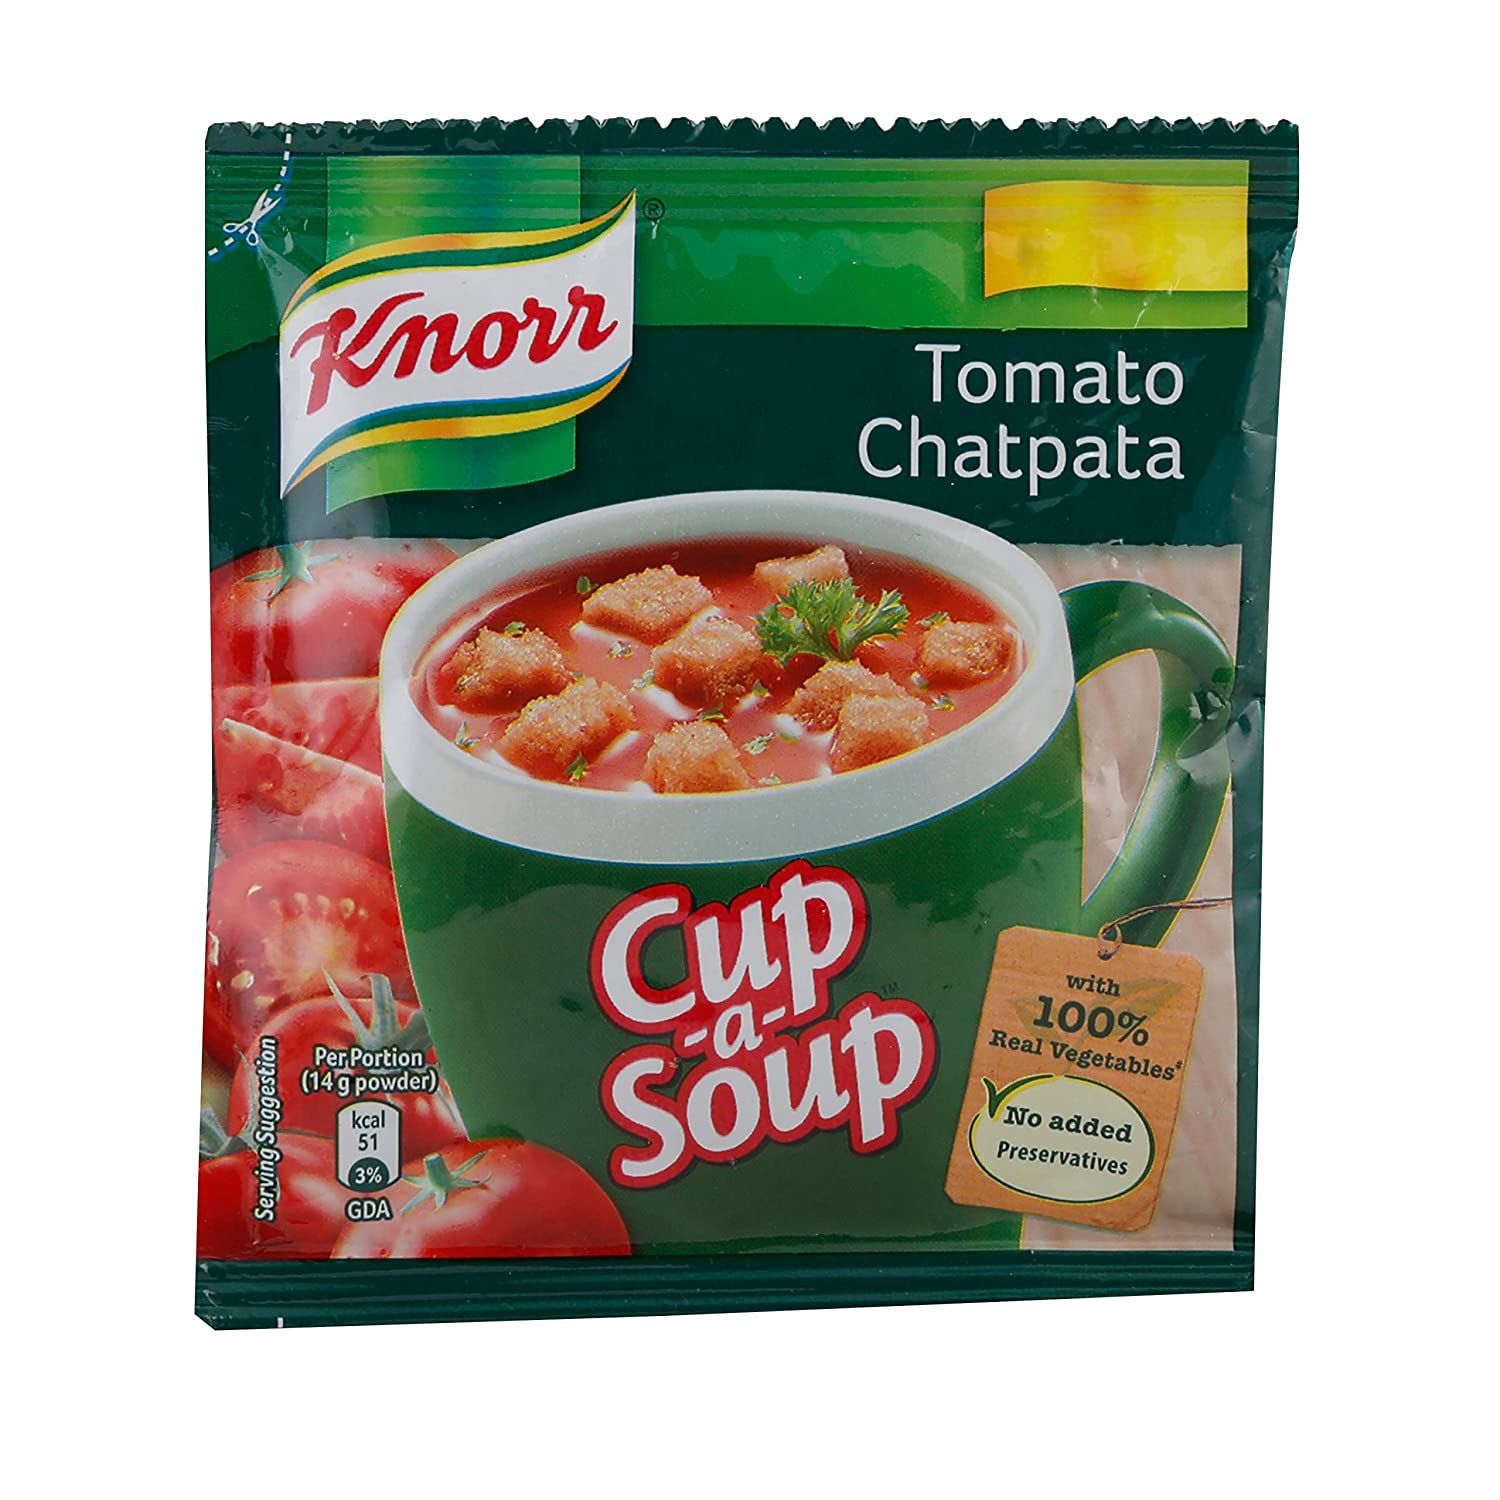 Knorr Tomato Chatpata Image